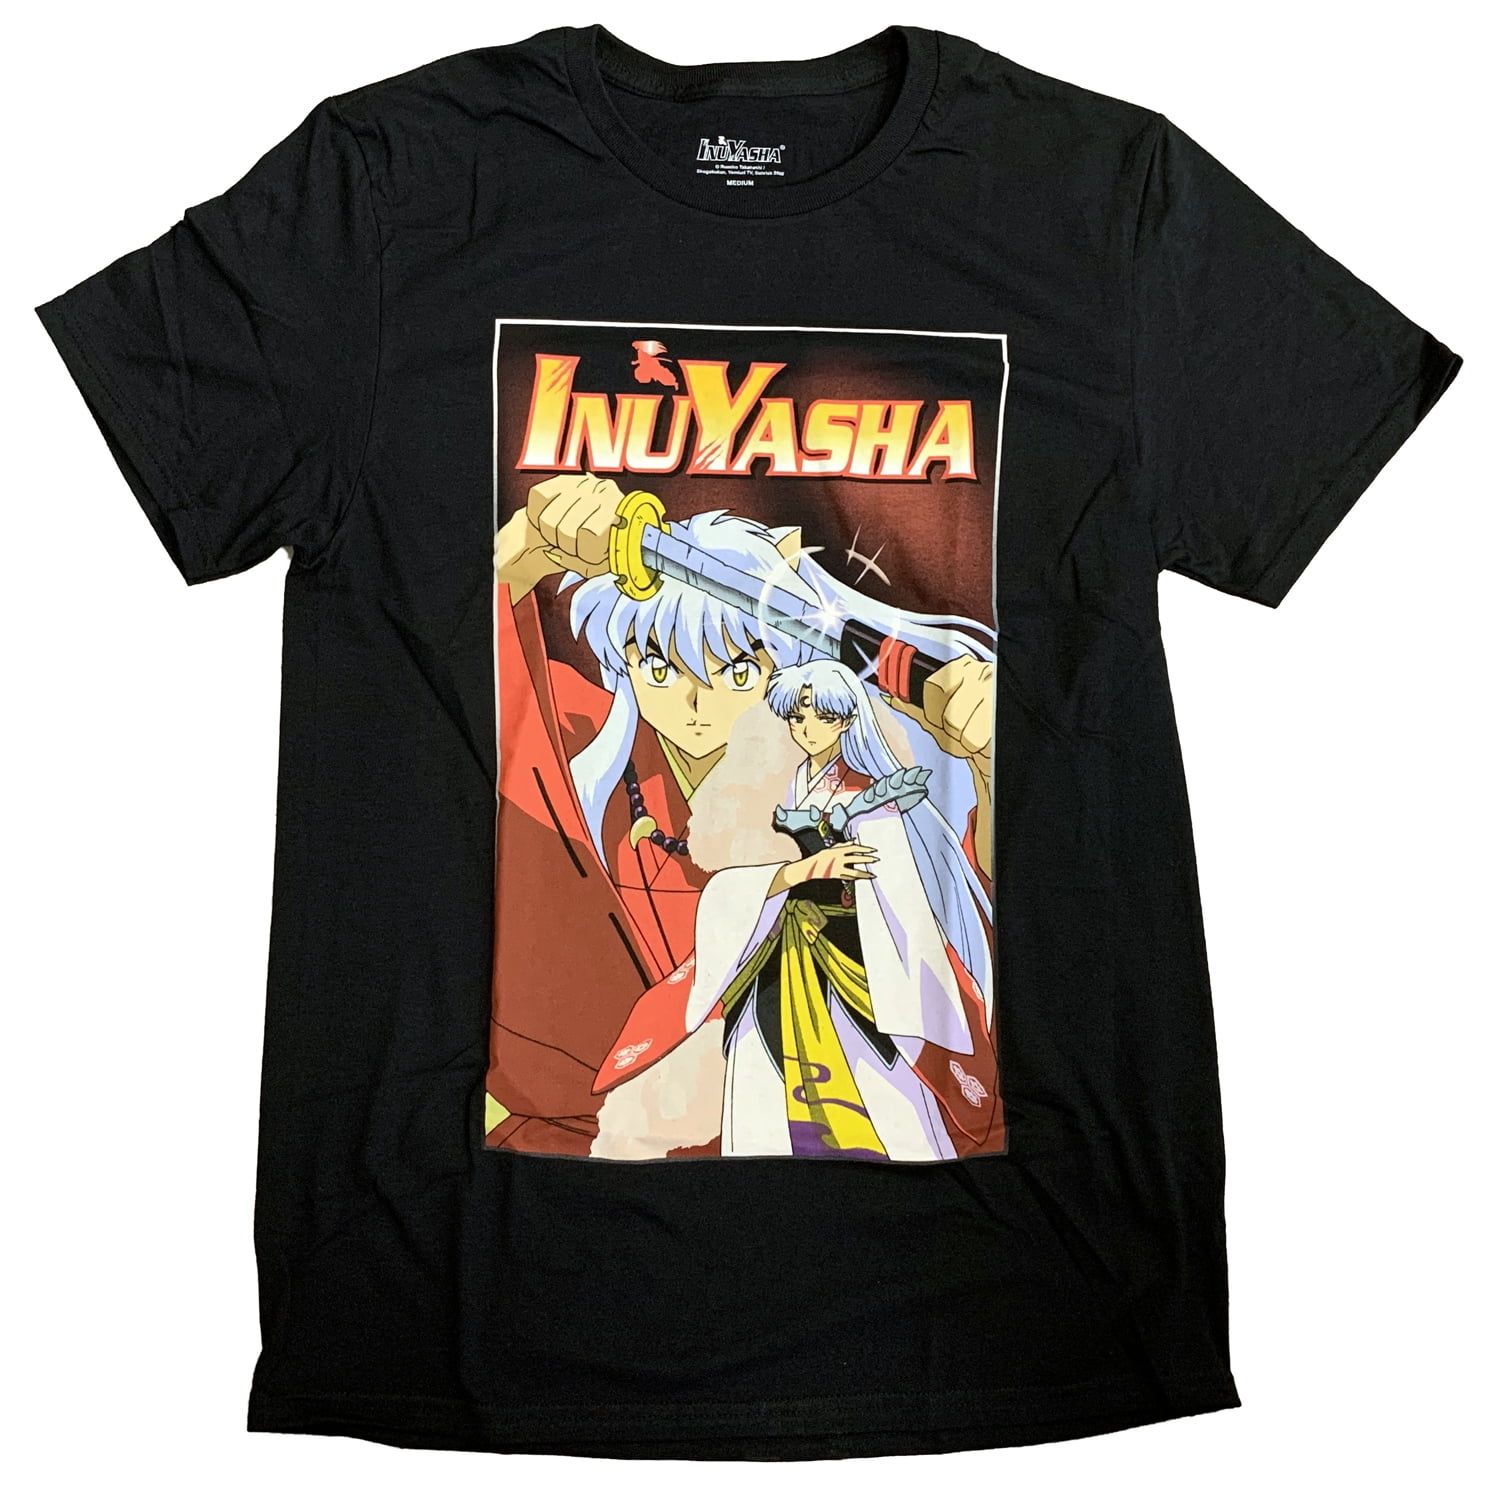 Vintage Initial D Fifth Stage Fujiwara Anime Unisex T-Shirt